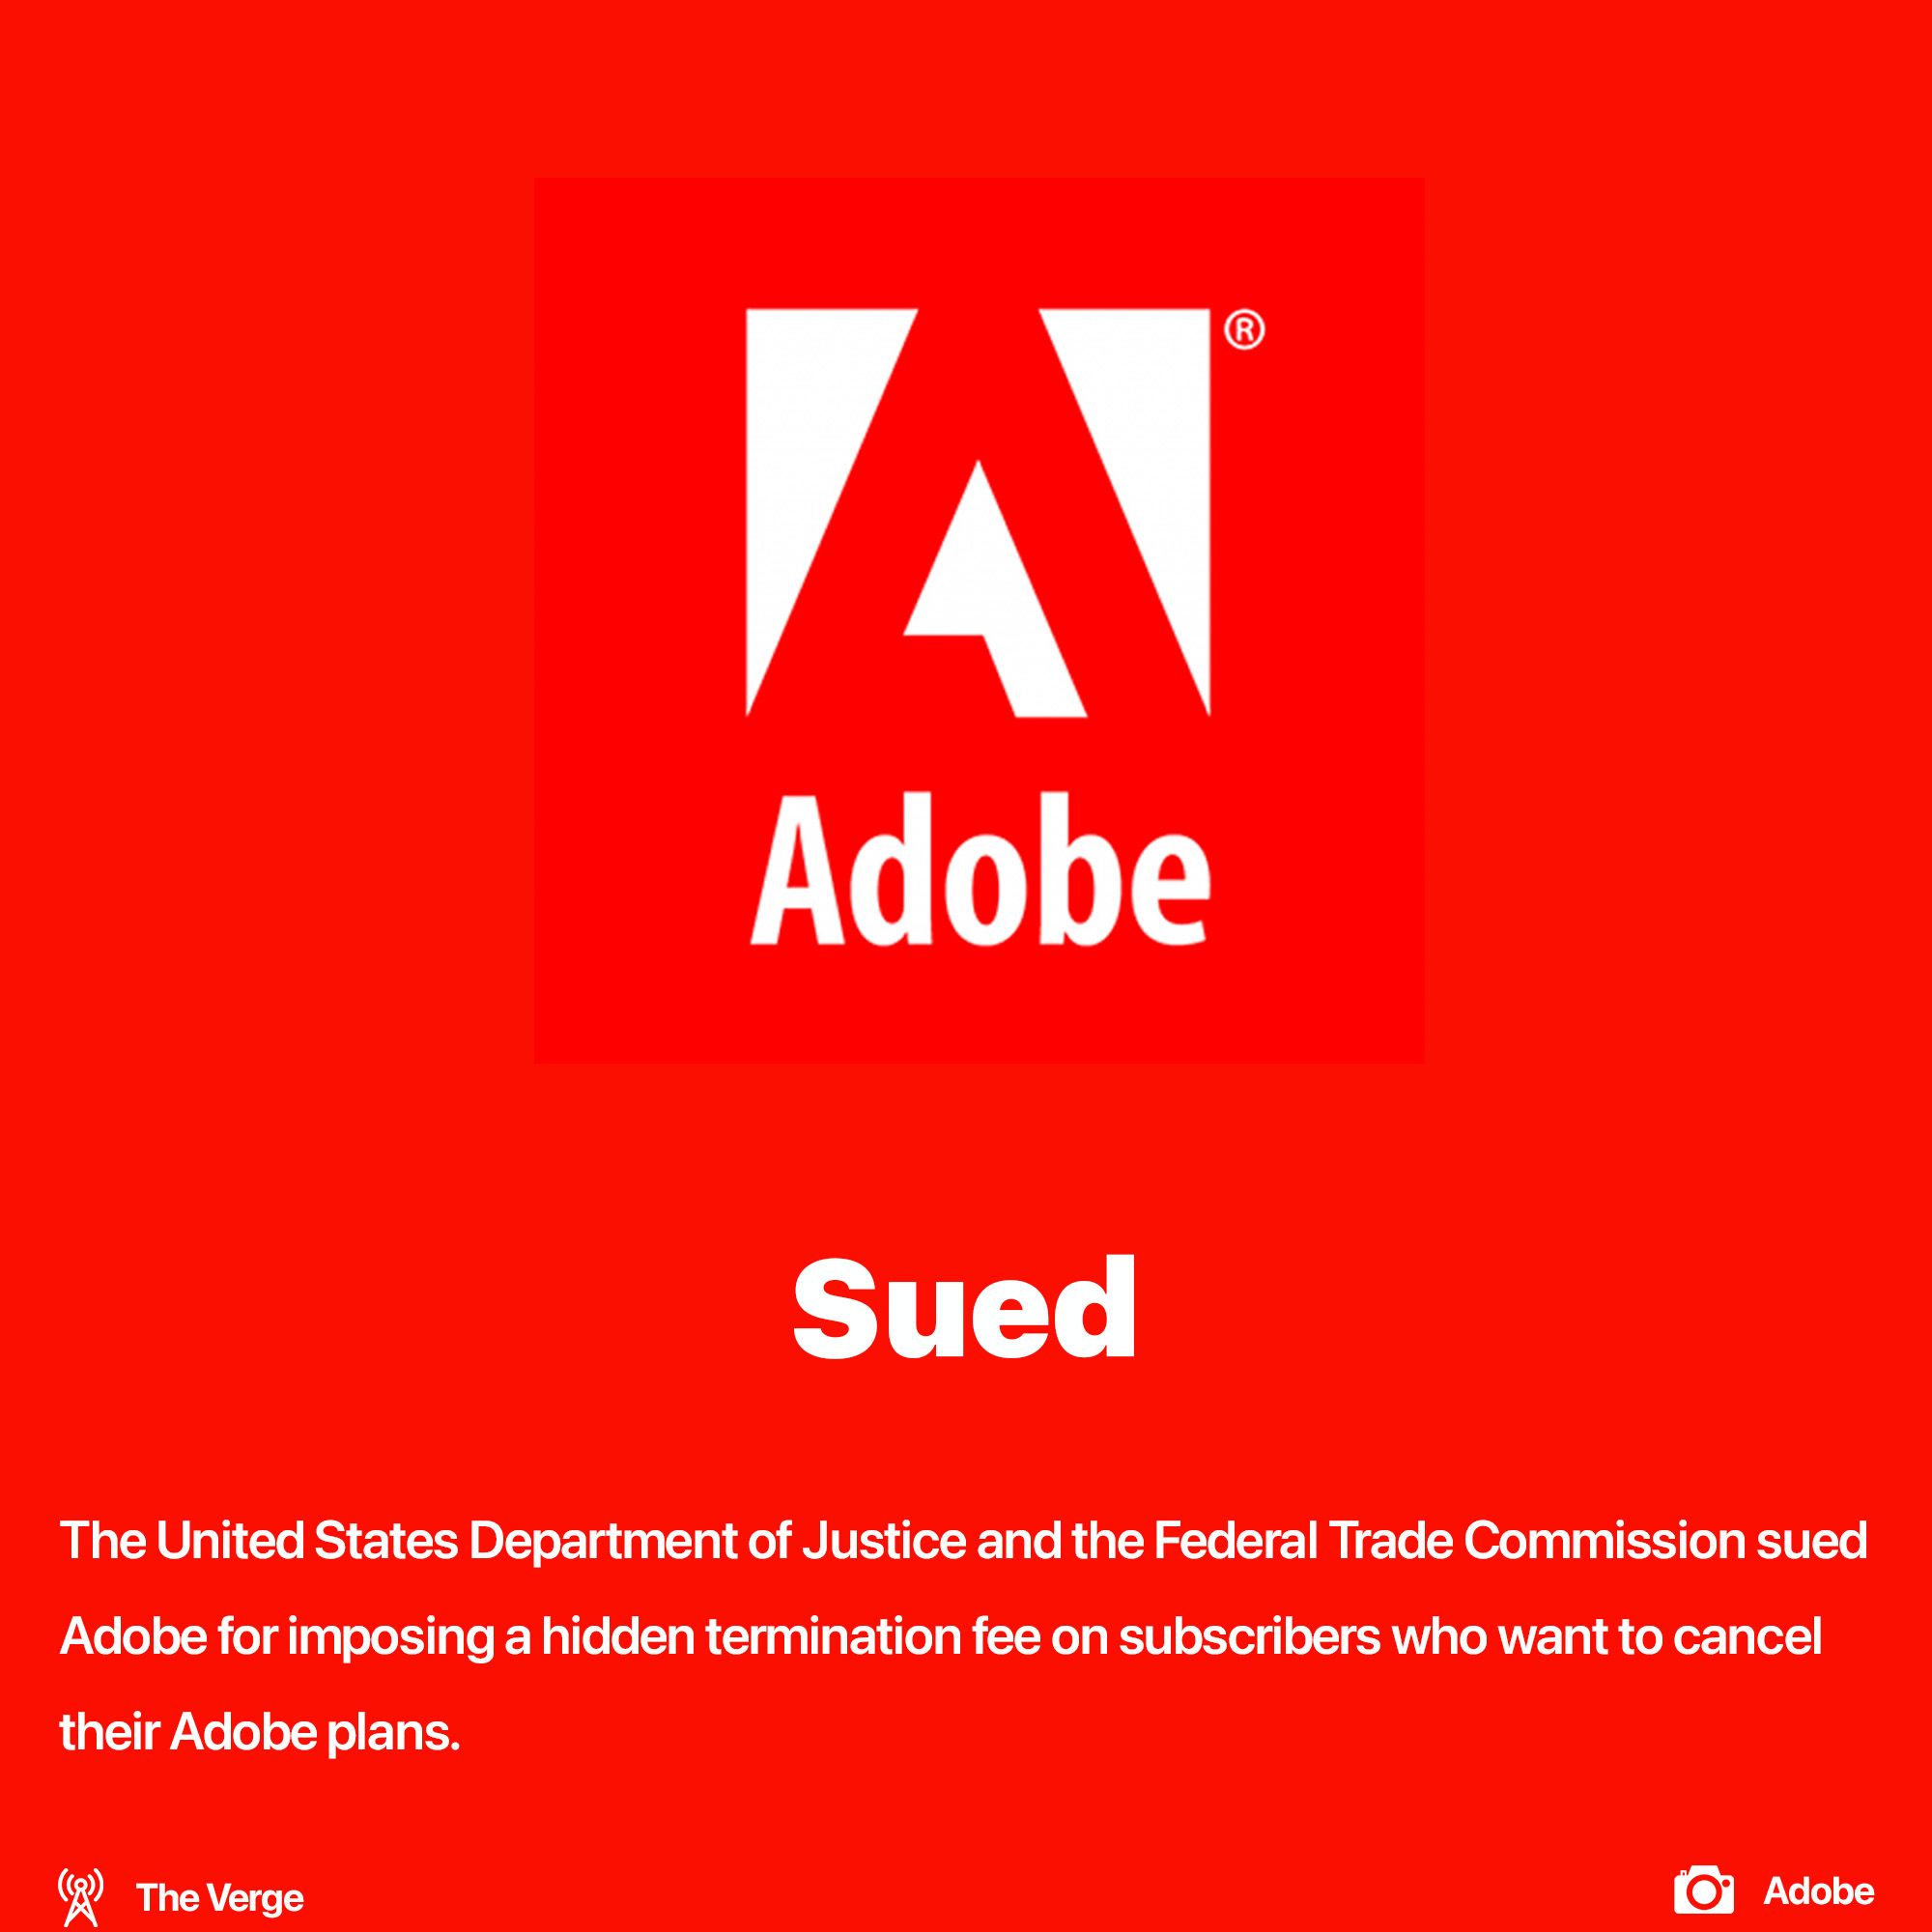 Adobe sued